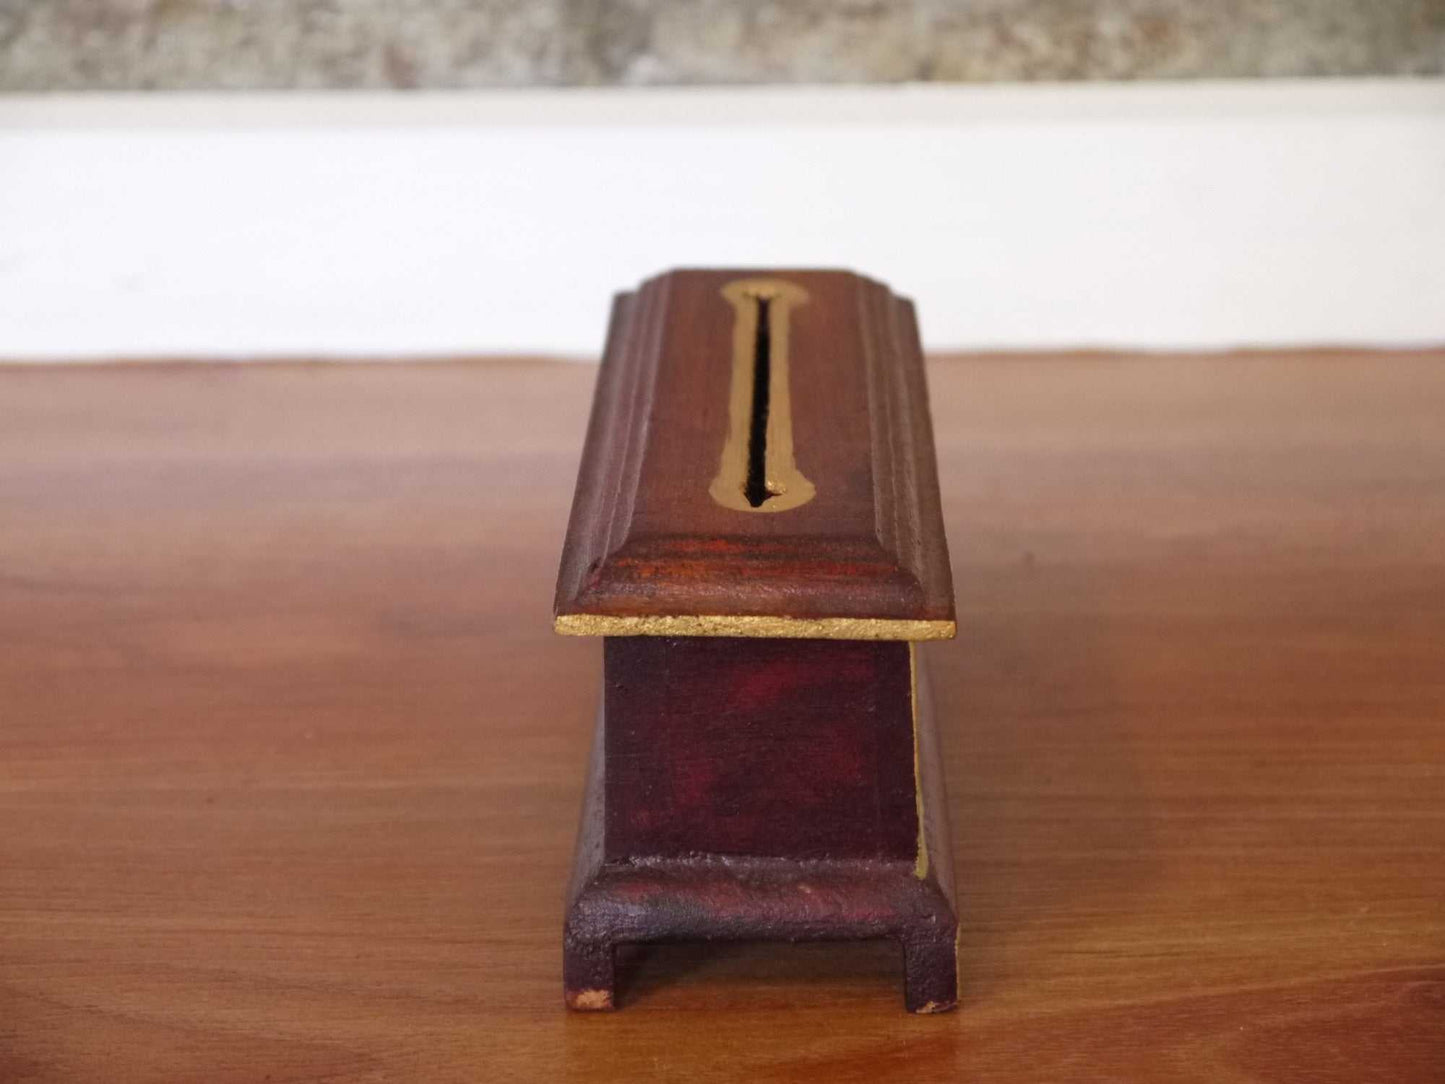 Tibetan Hand Painted Incense Box